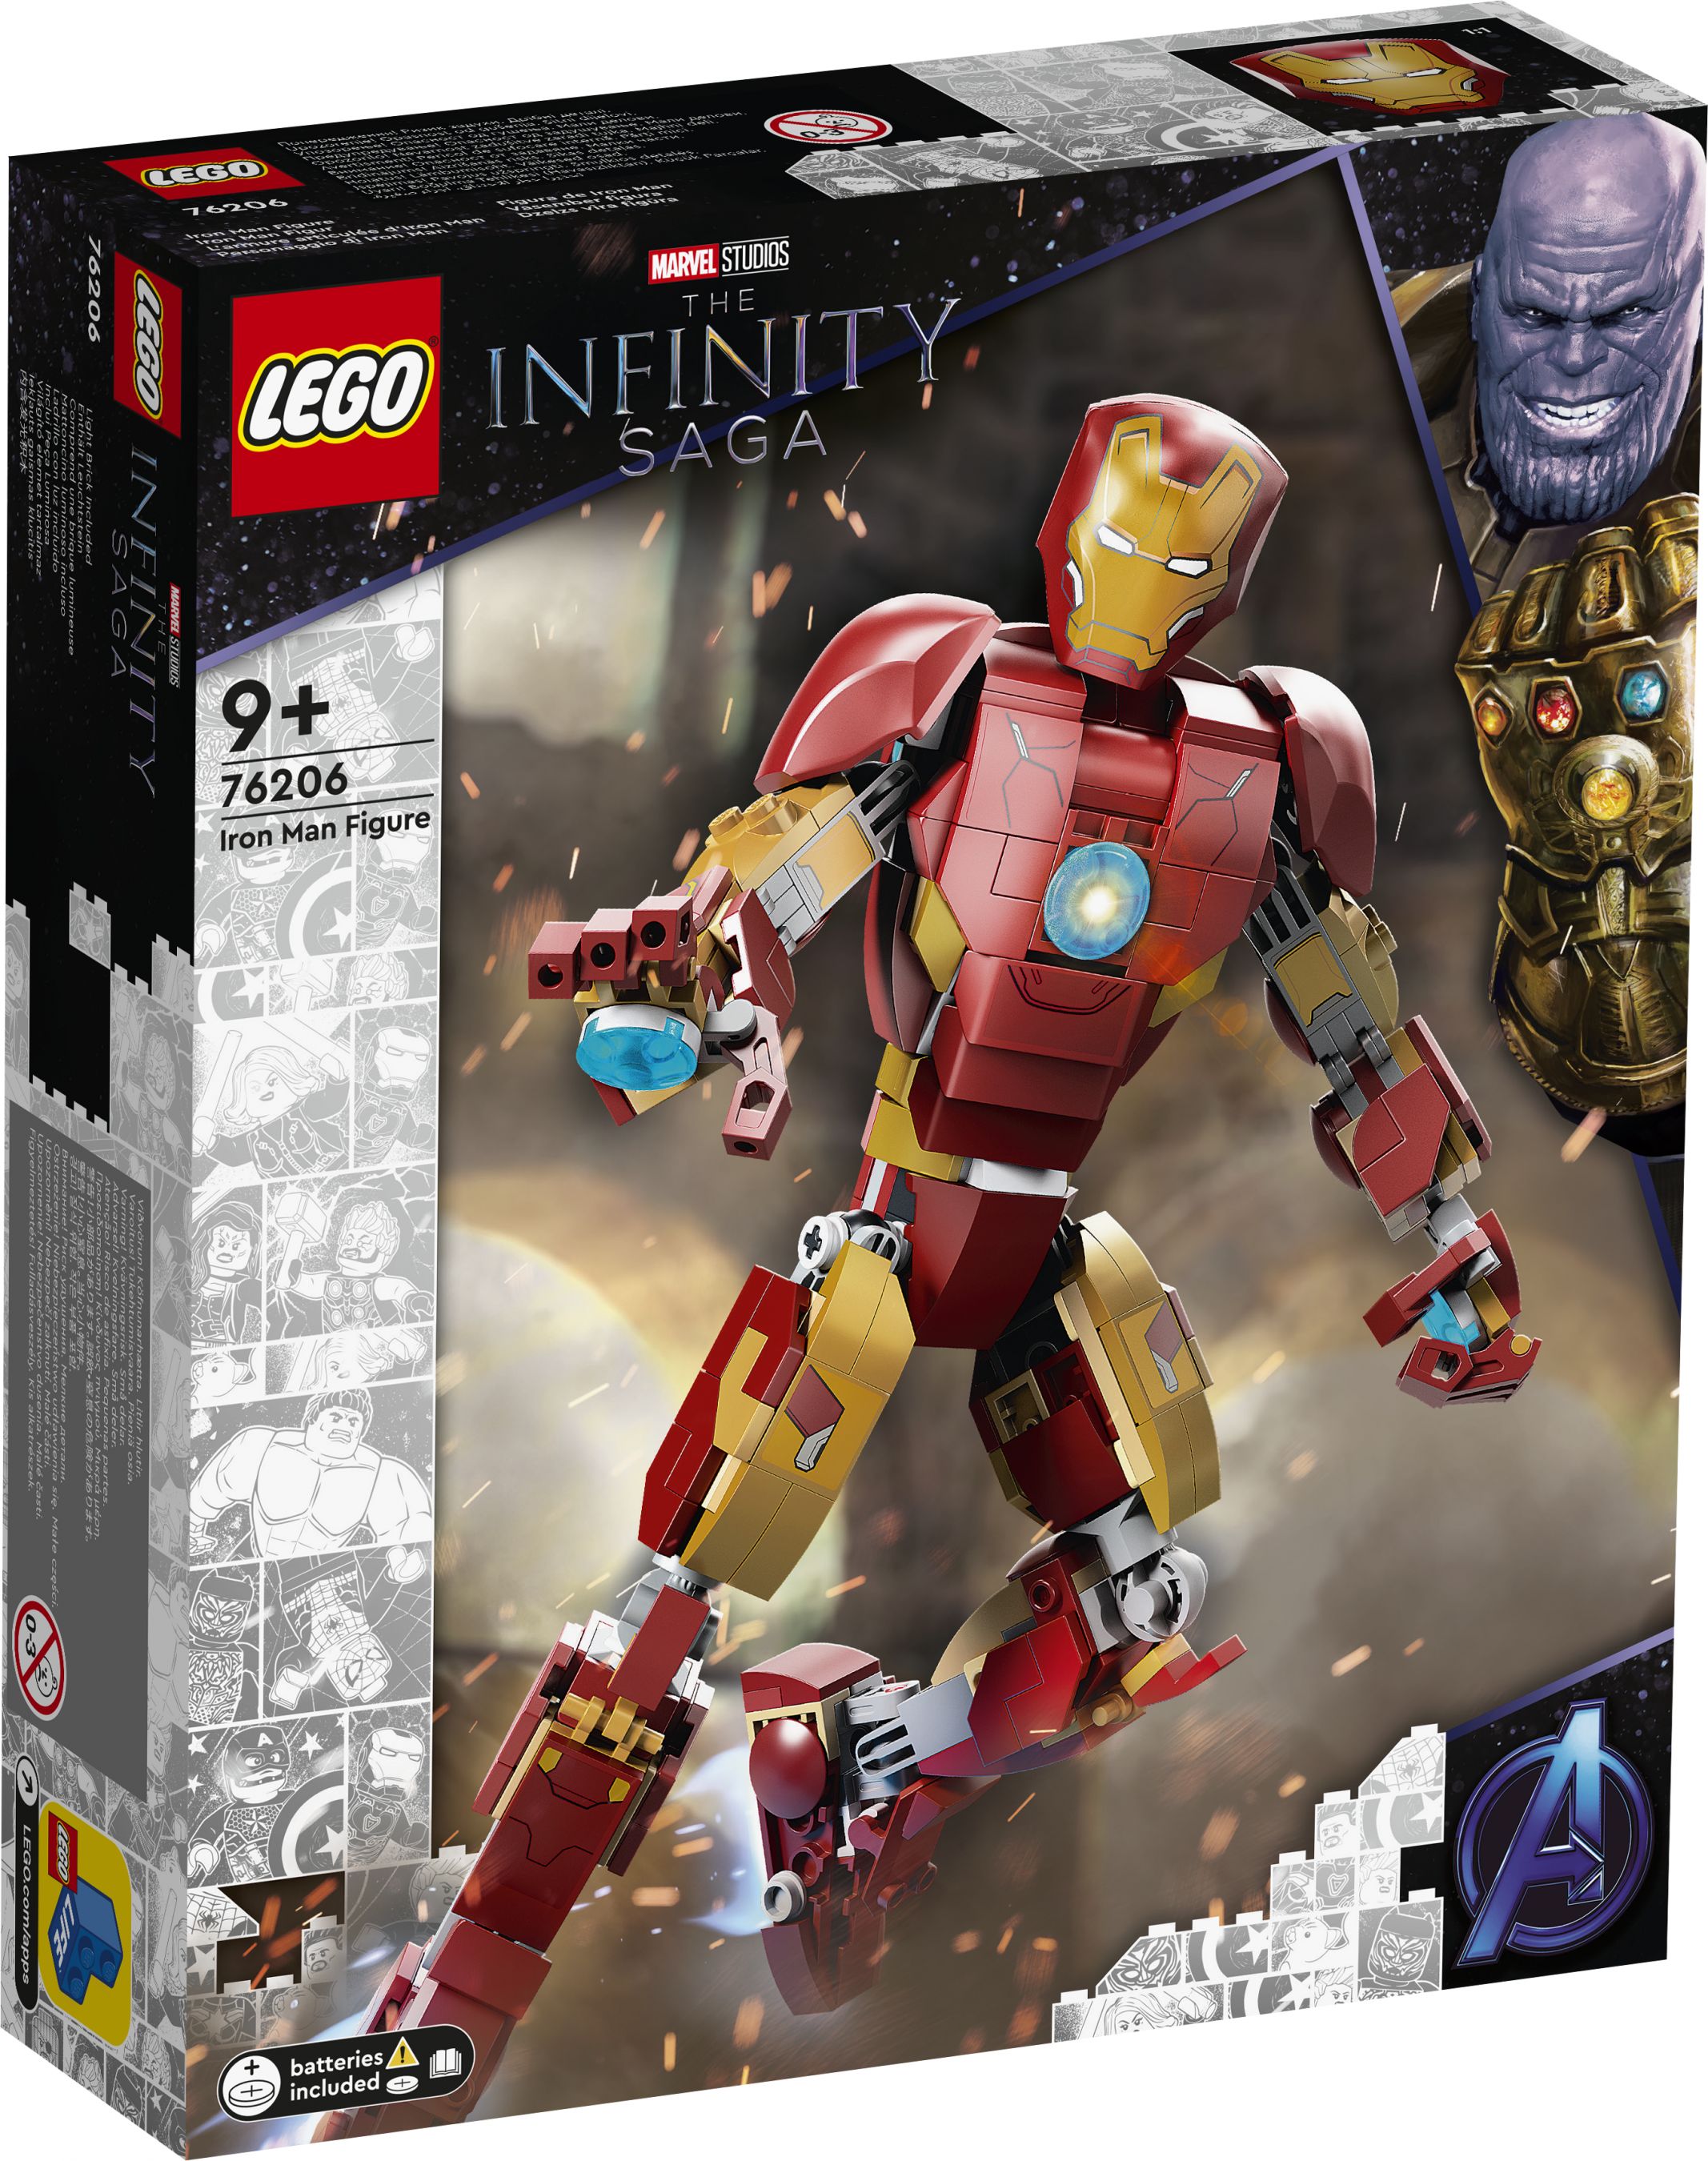 LEGO Super Heroes 76206 Iron Man Figur LEGO_76206_box1_v29.jpg